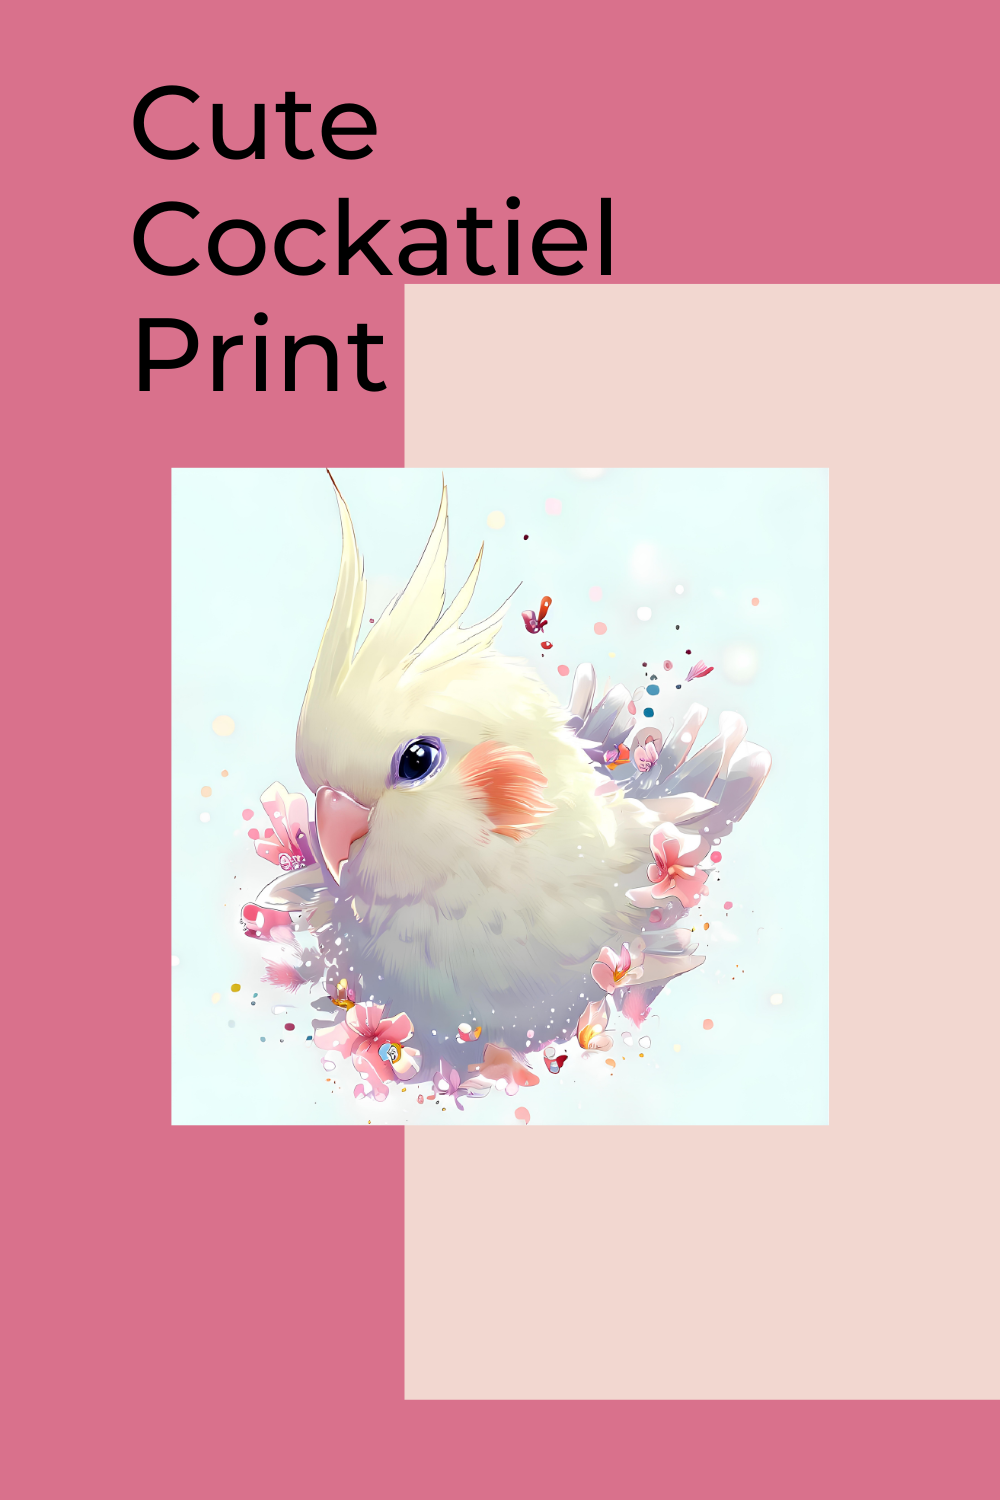 Cute Cockatiel Print pinterest preview image.